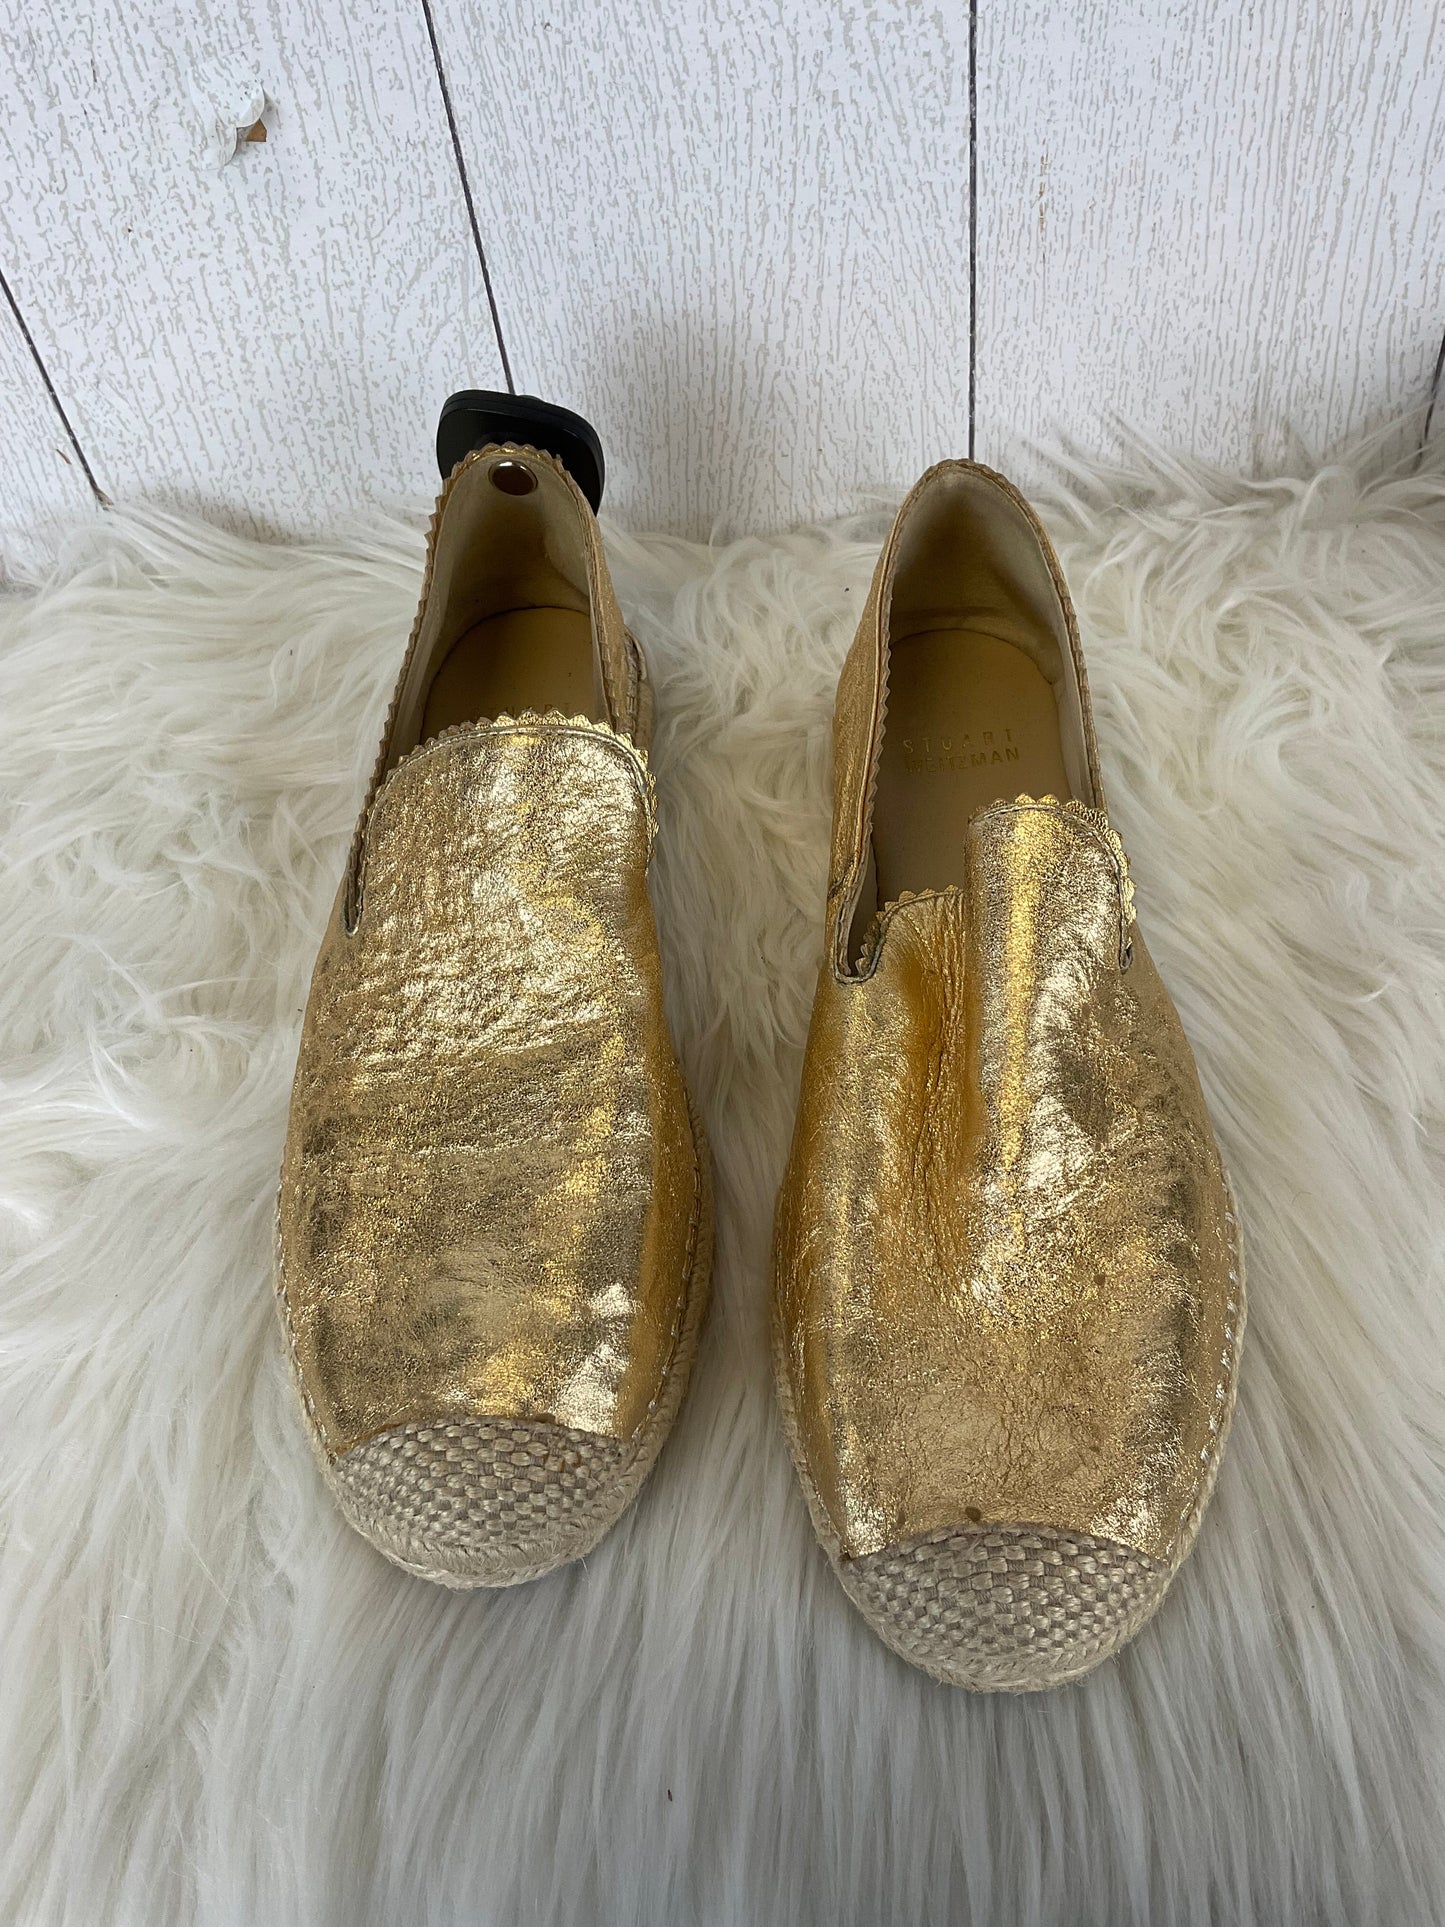 Gold Shoes Designer Stuart Weitzman, Size 8